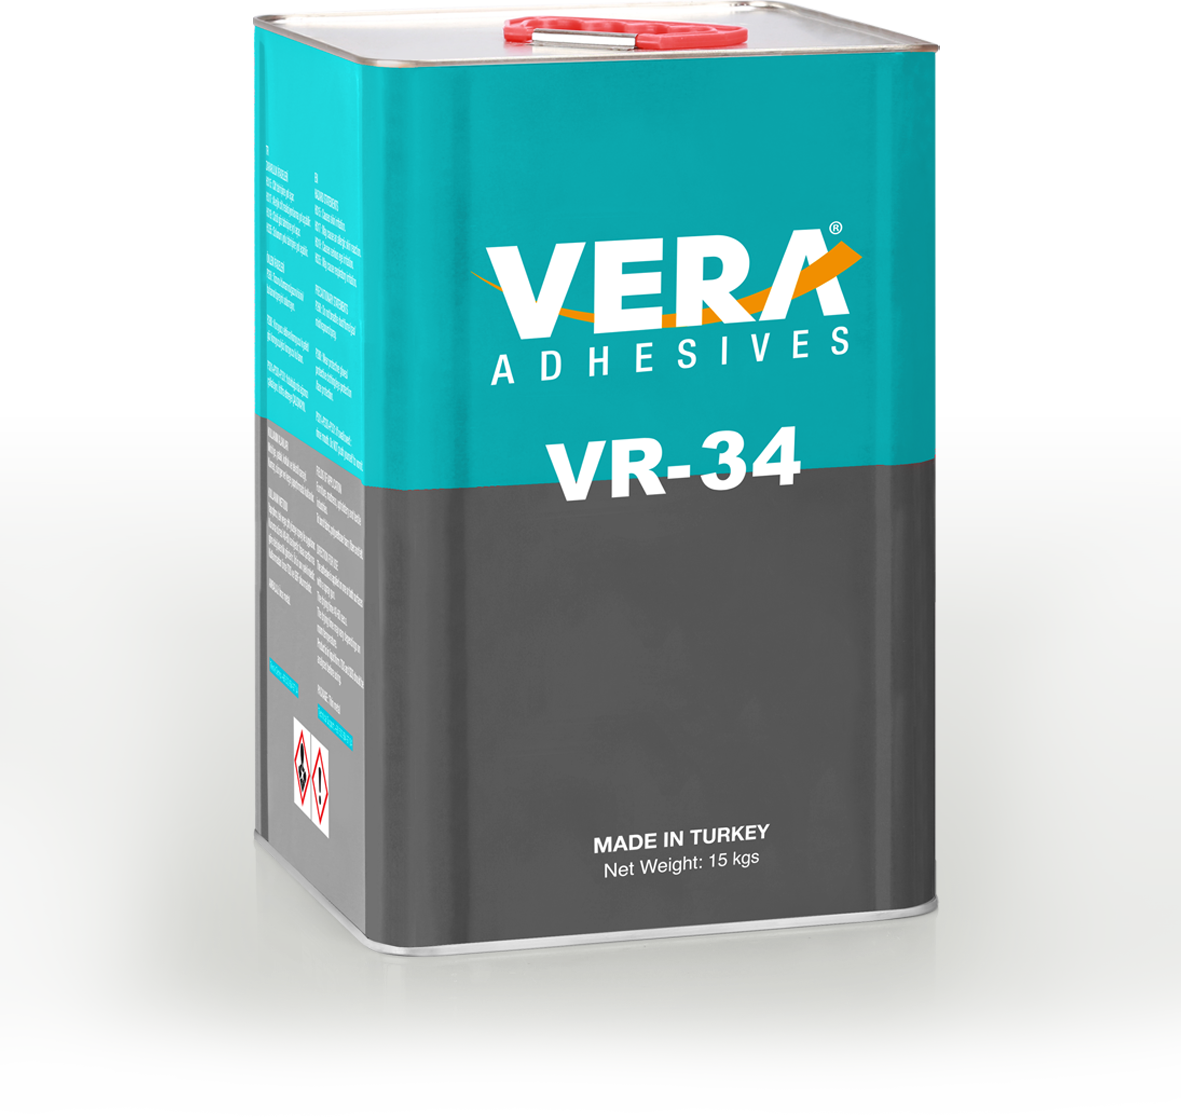 Vera VR-34